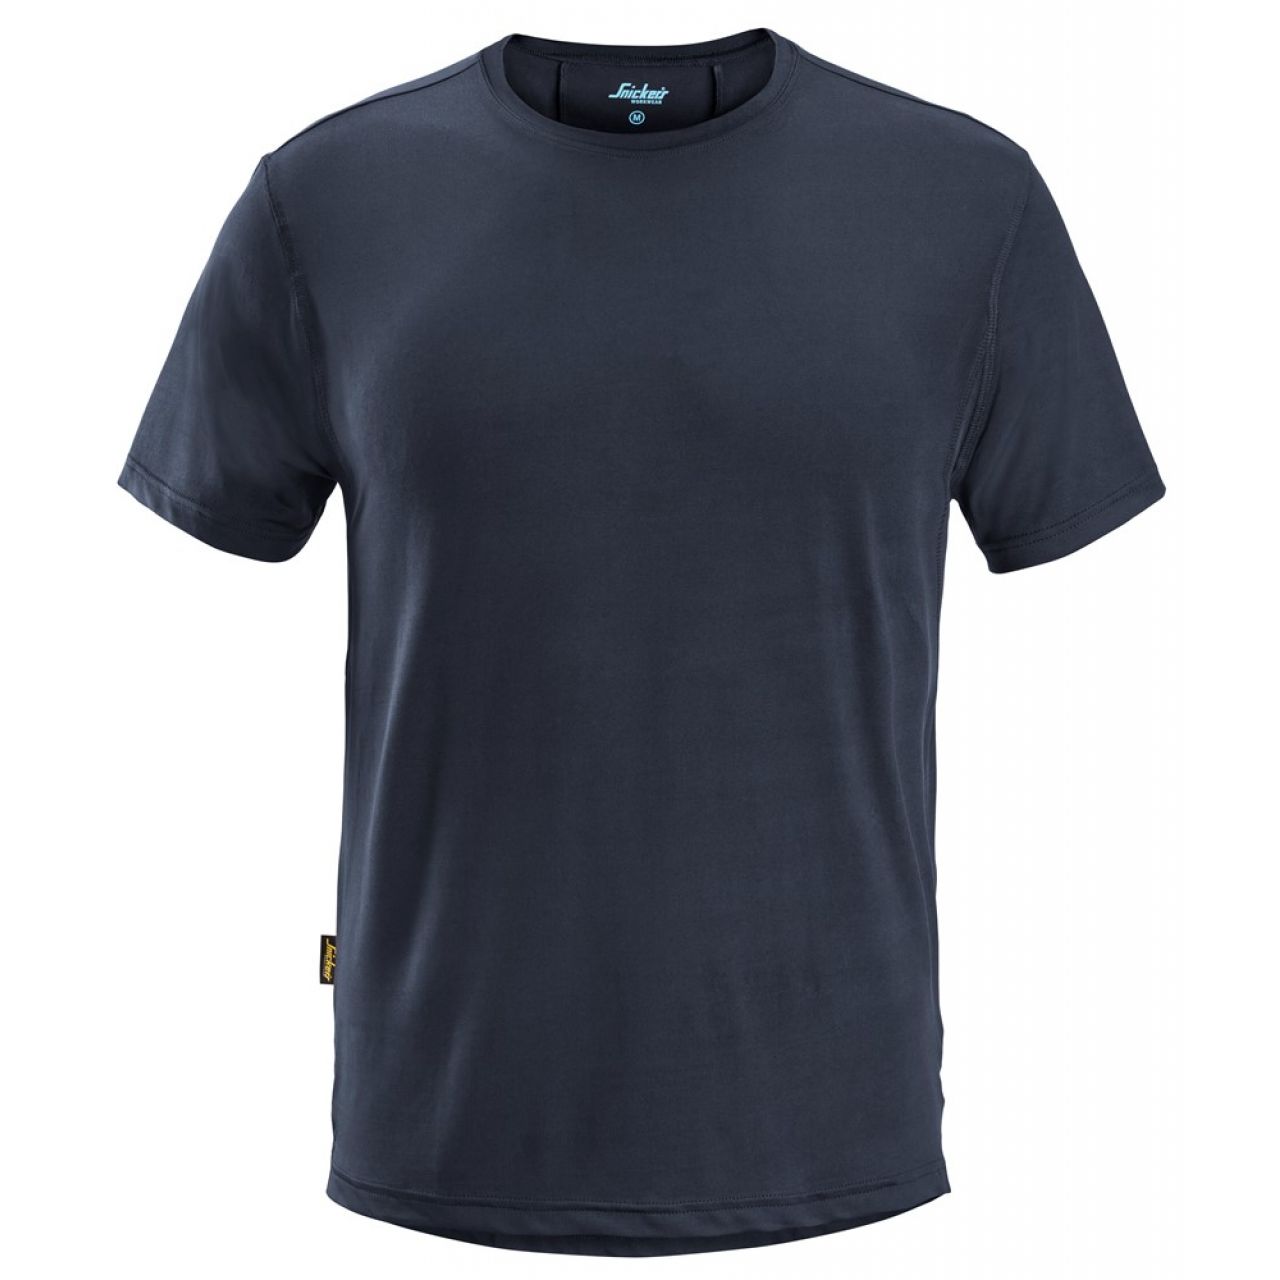 2511 Camiseta de manga corta LiteWork azul marino talla 3XL